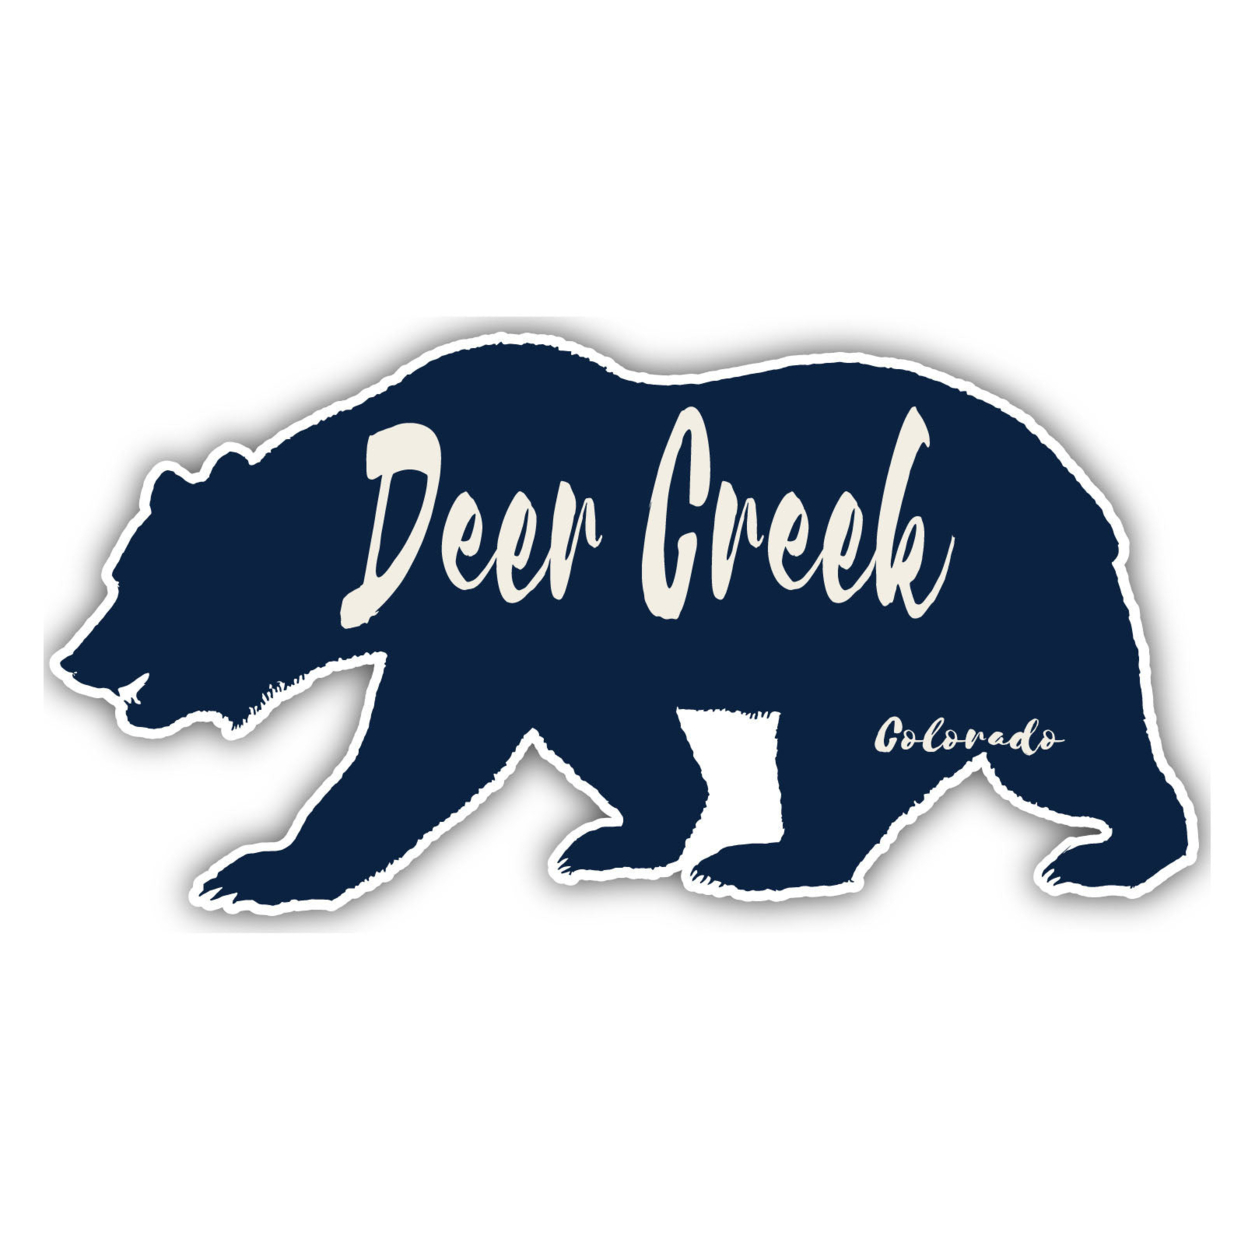 Deer Creek Colorado Souvenir Decorative Stickers (Choose Theme And Size) - Single Unit, 10-Inch, Bear